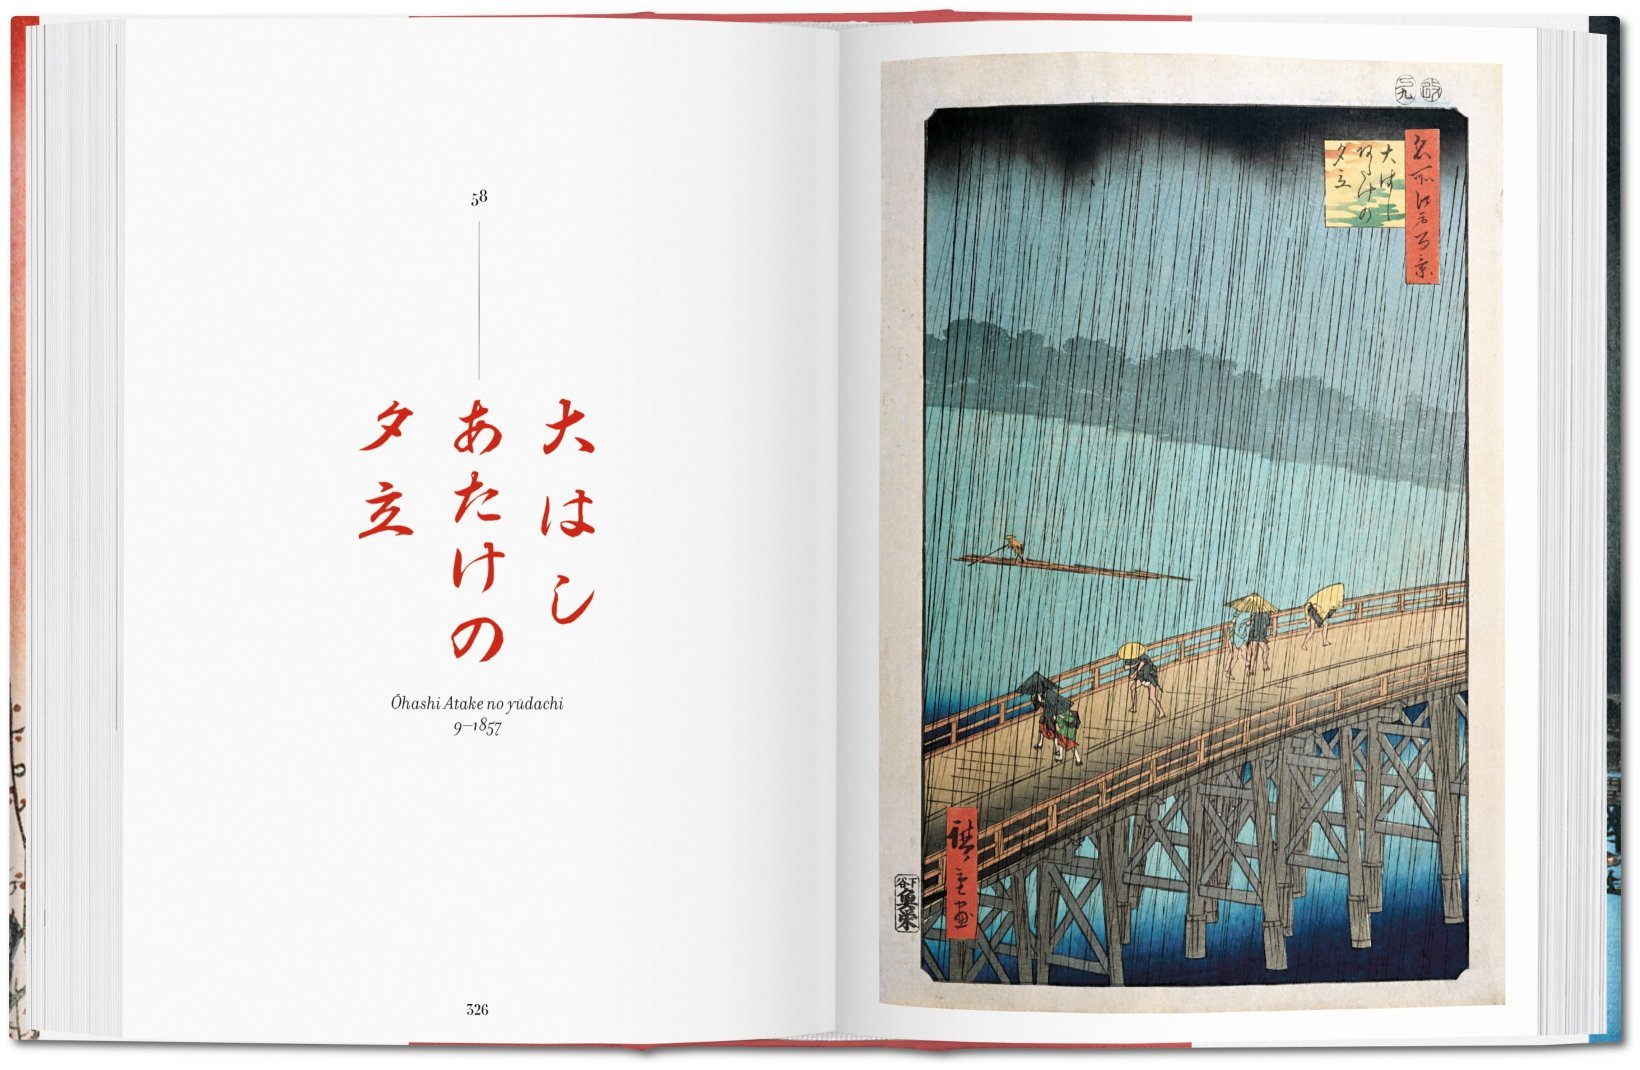 Hiroshige - Small